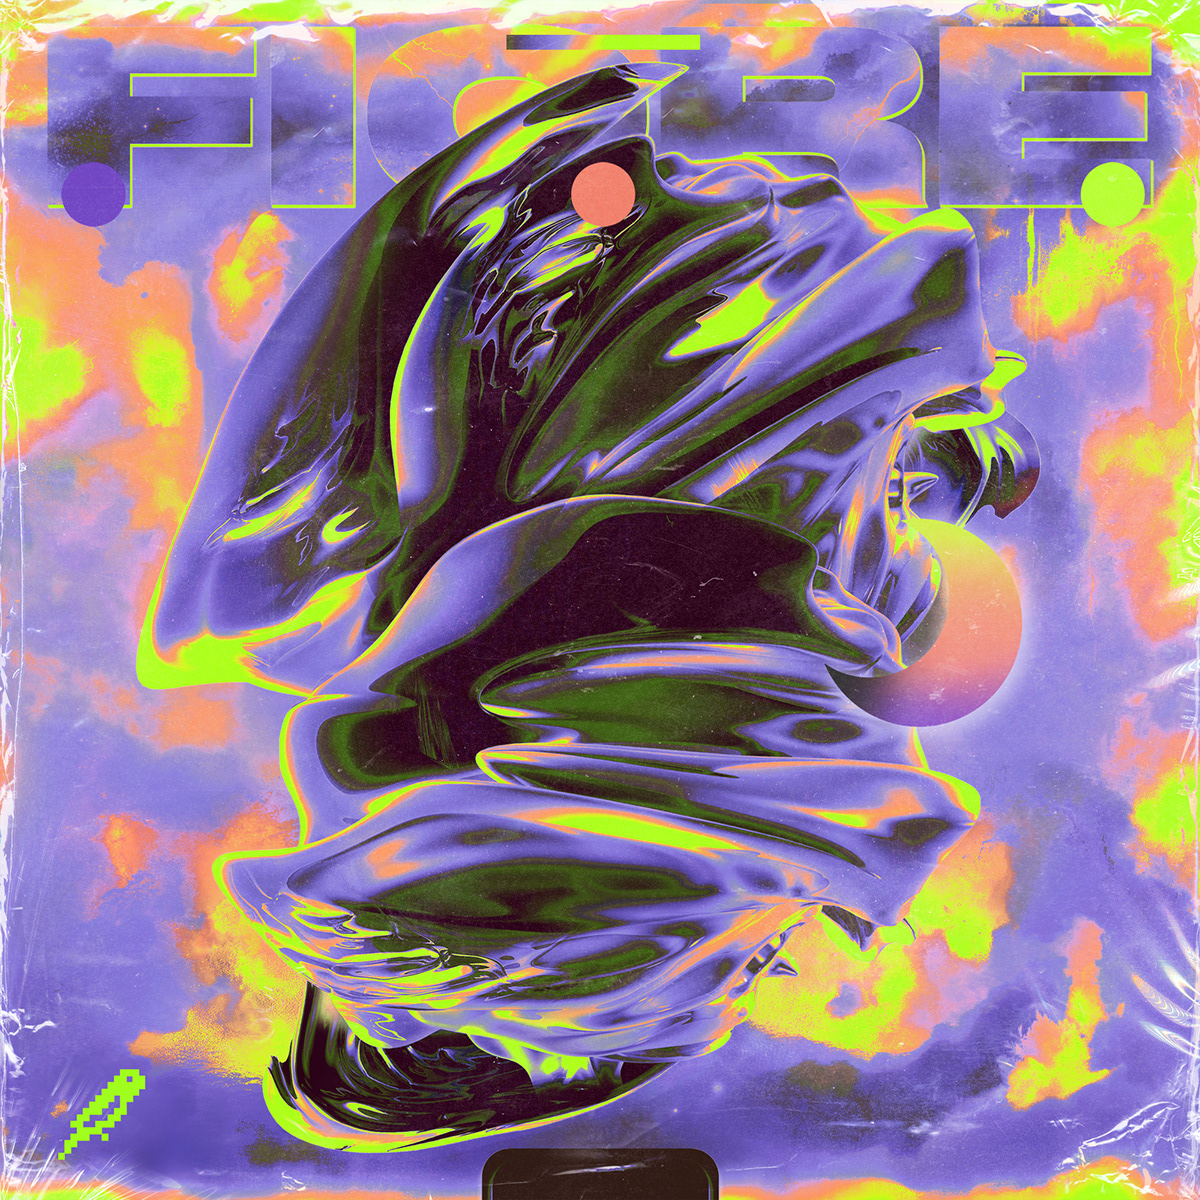 3D abstract album art c4d cover artwork Digital Art  electronic music graphic design  ILLUSTRATION  typography  